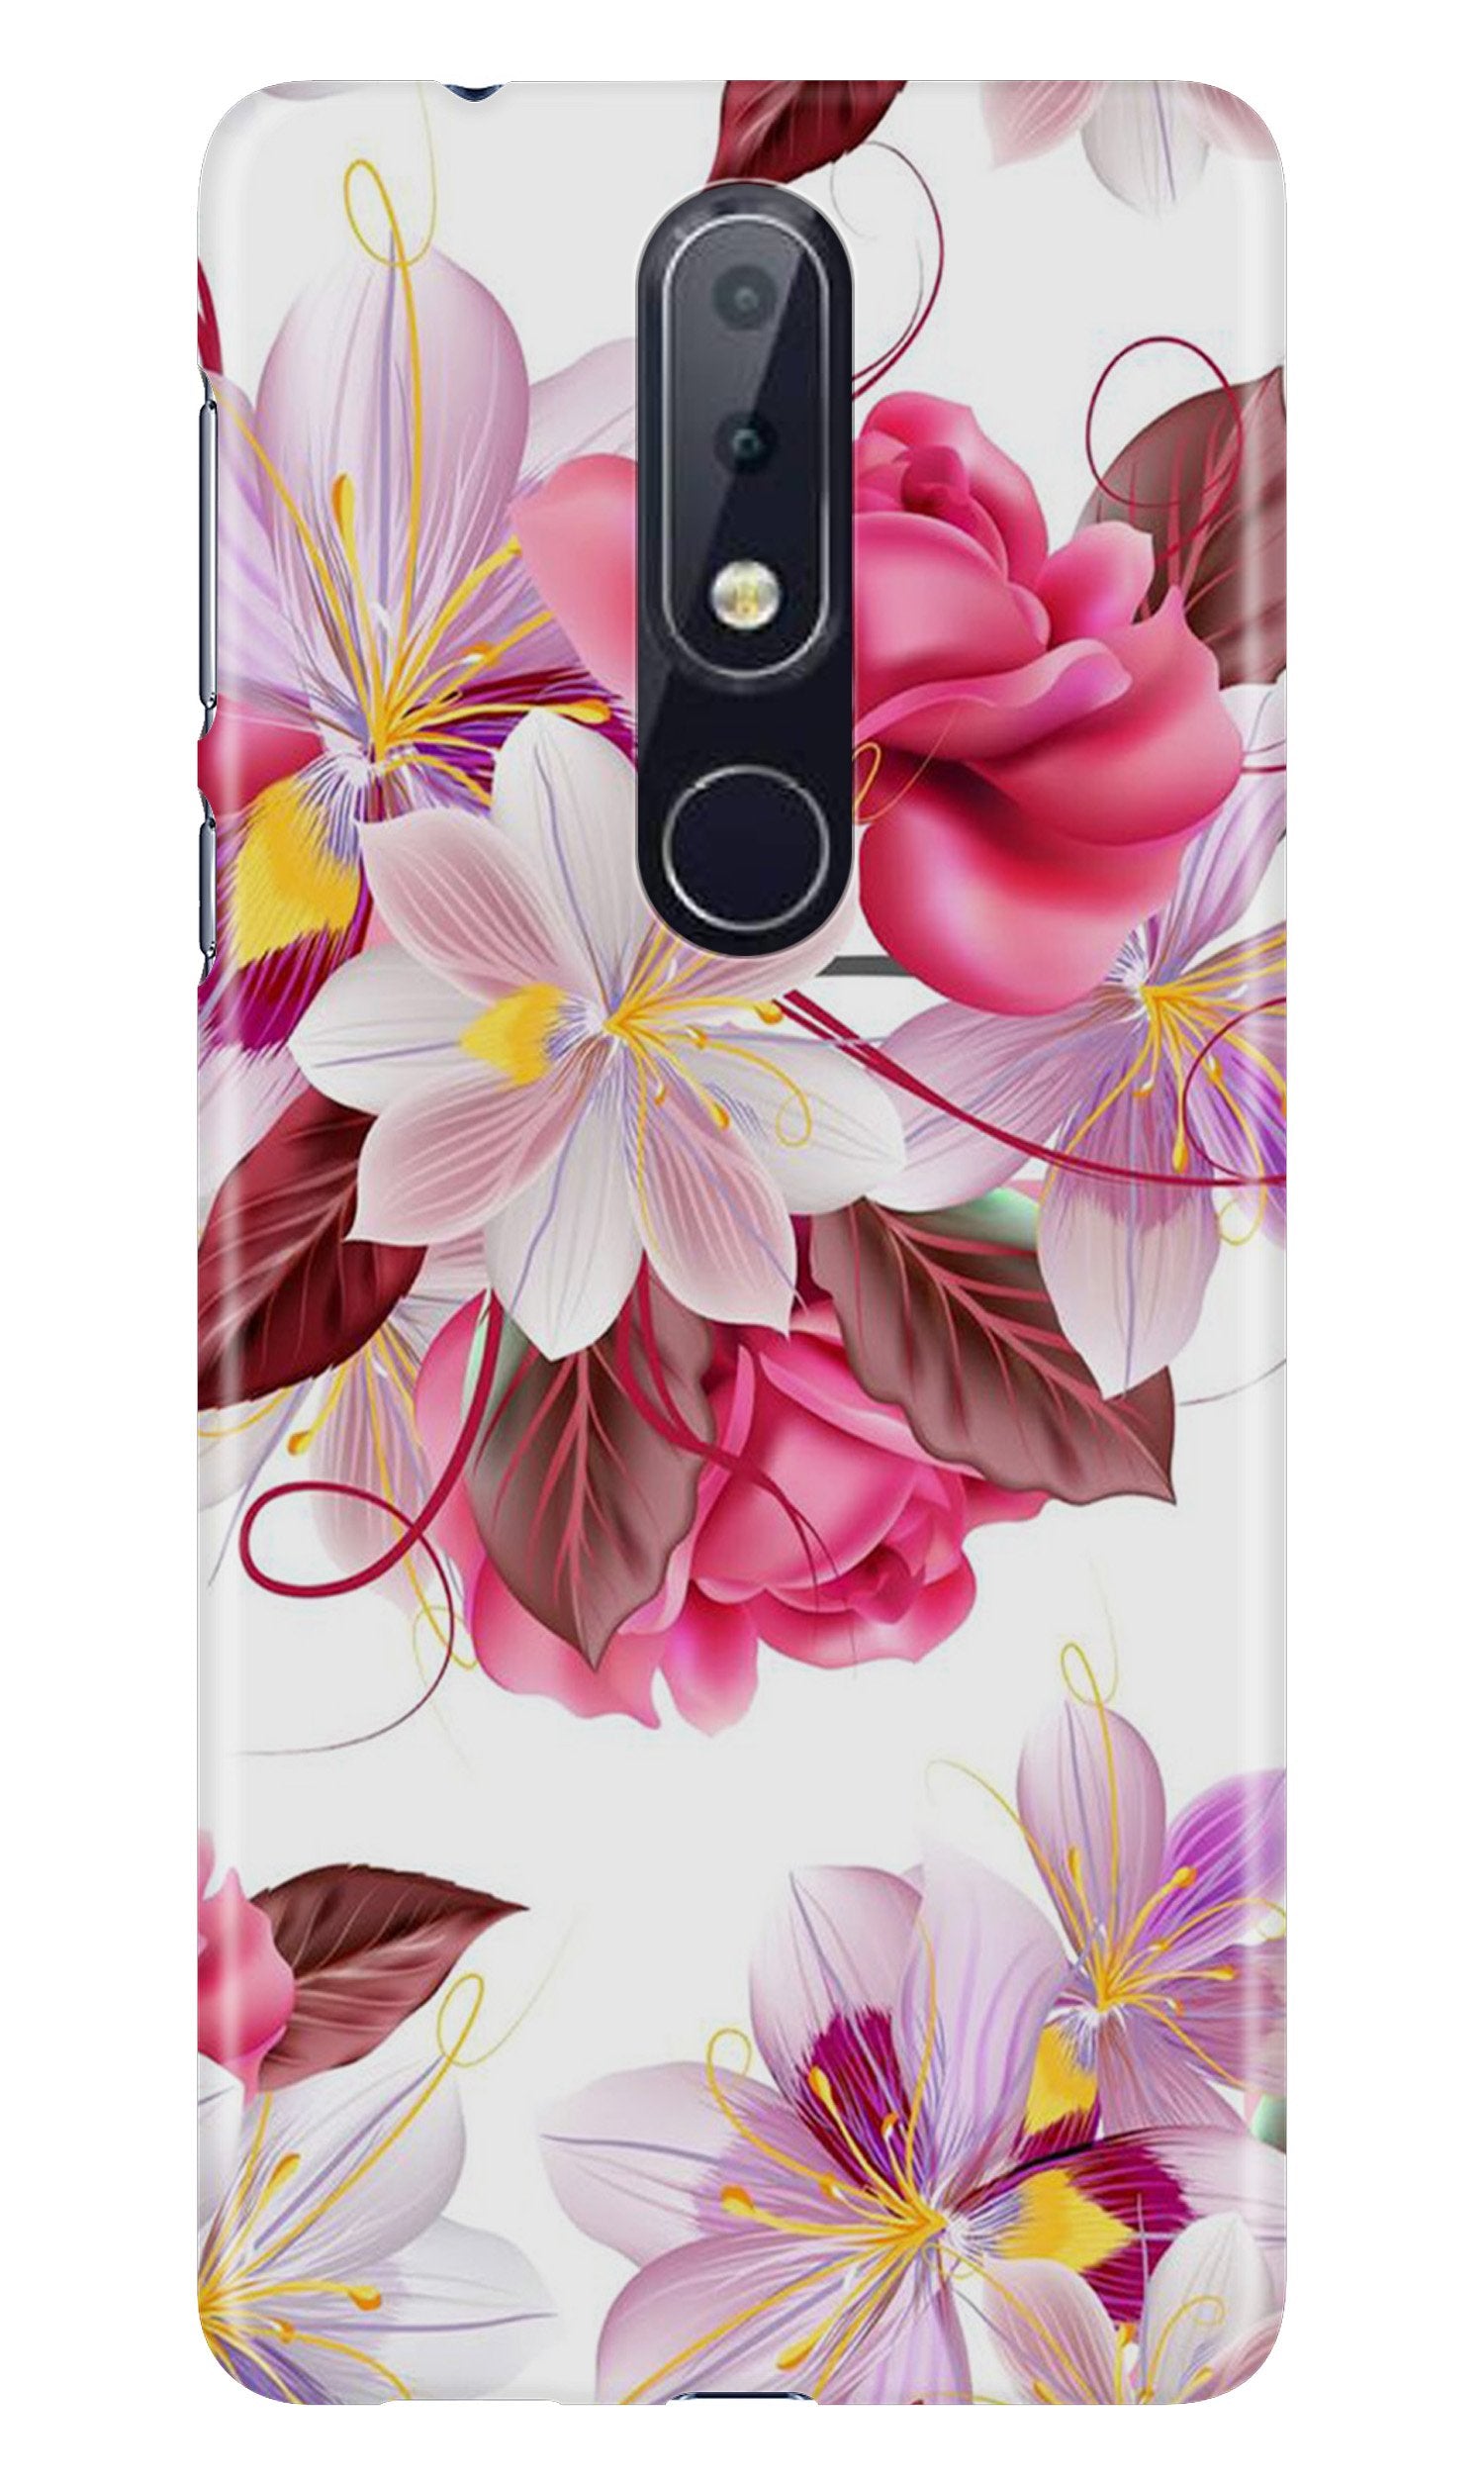 Beautiful flowers Case for Nokia 6.1 Plus